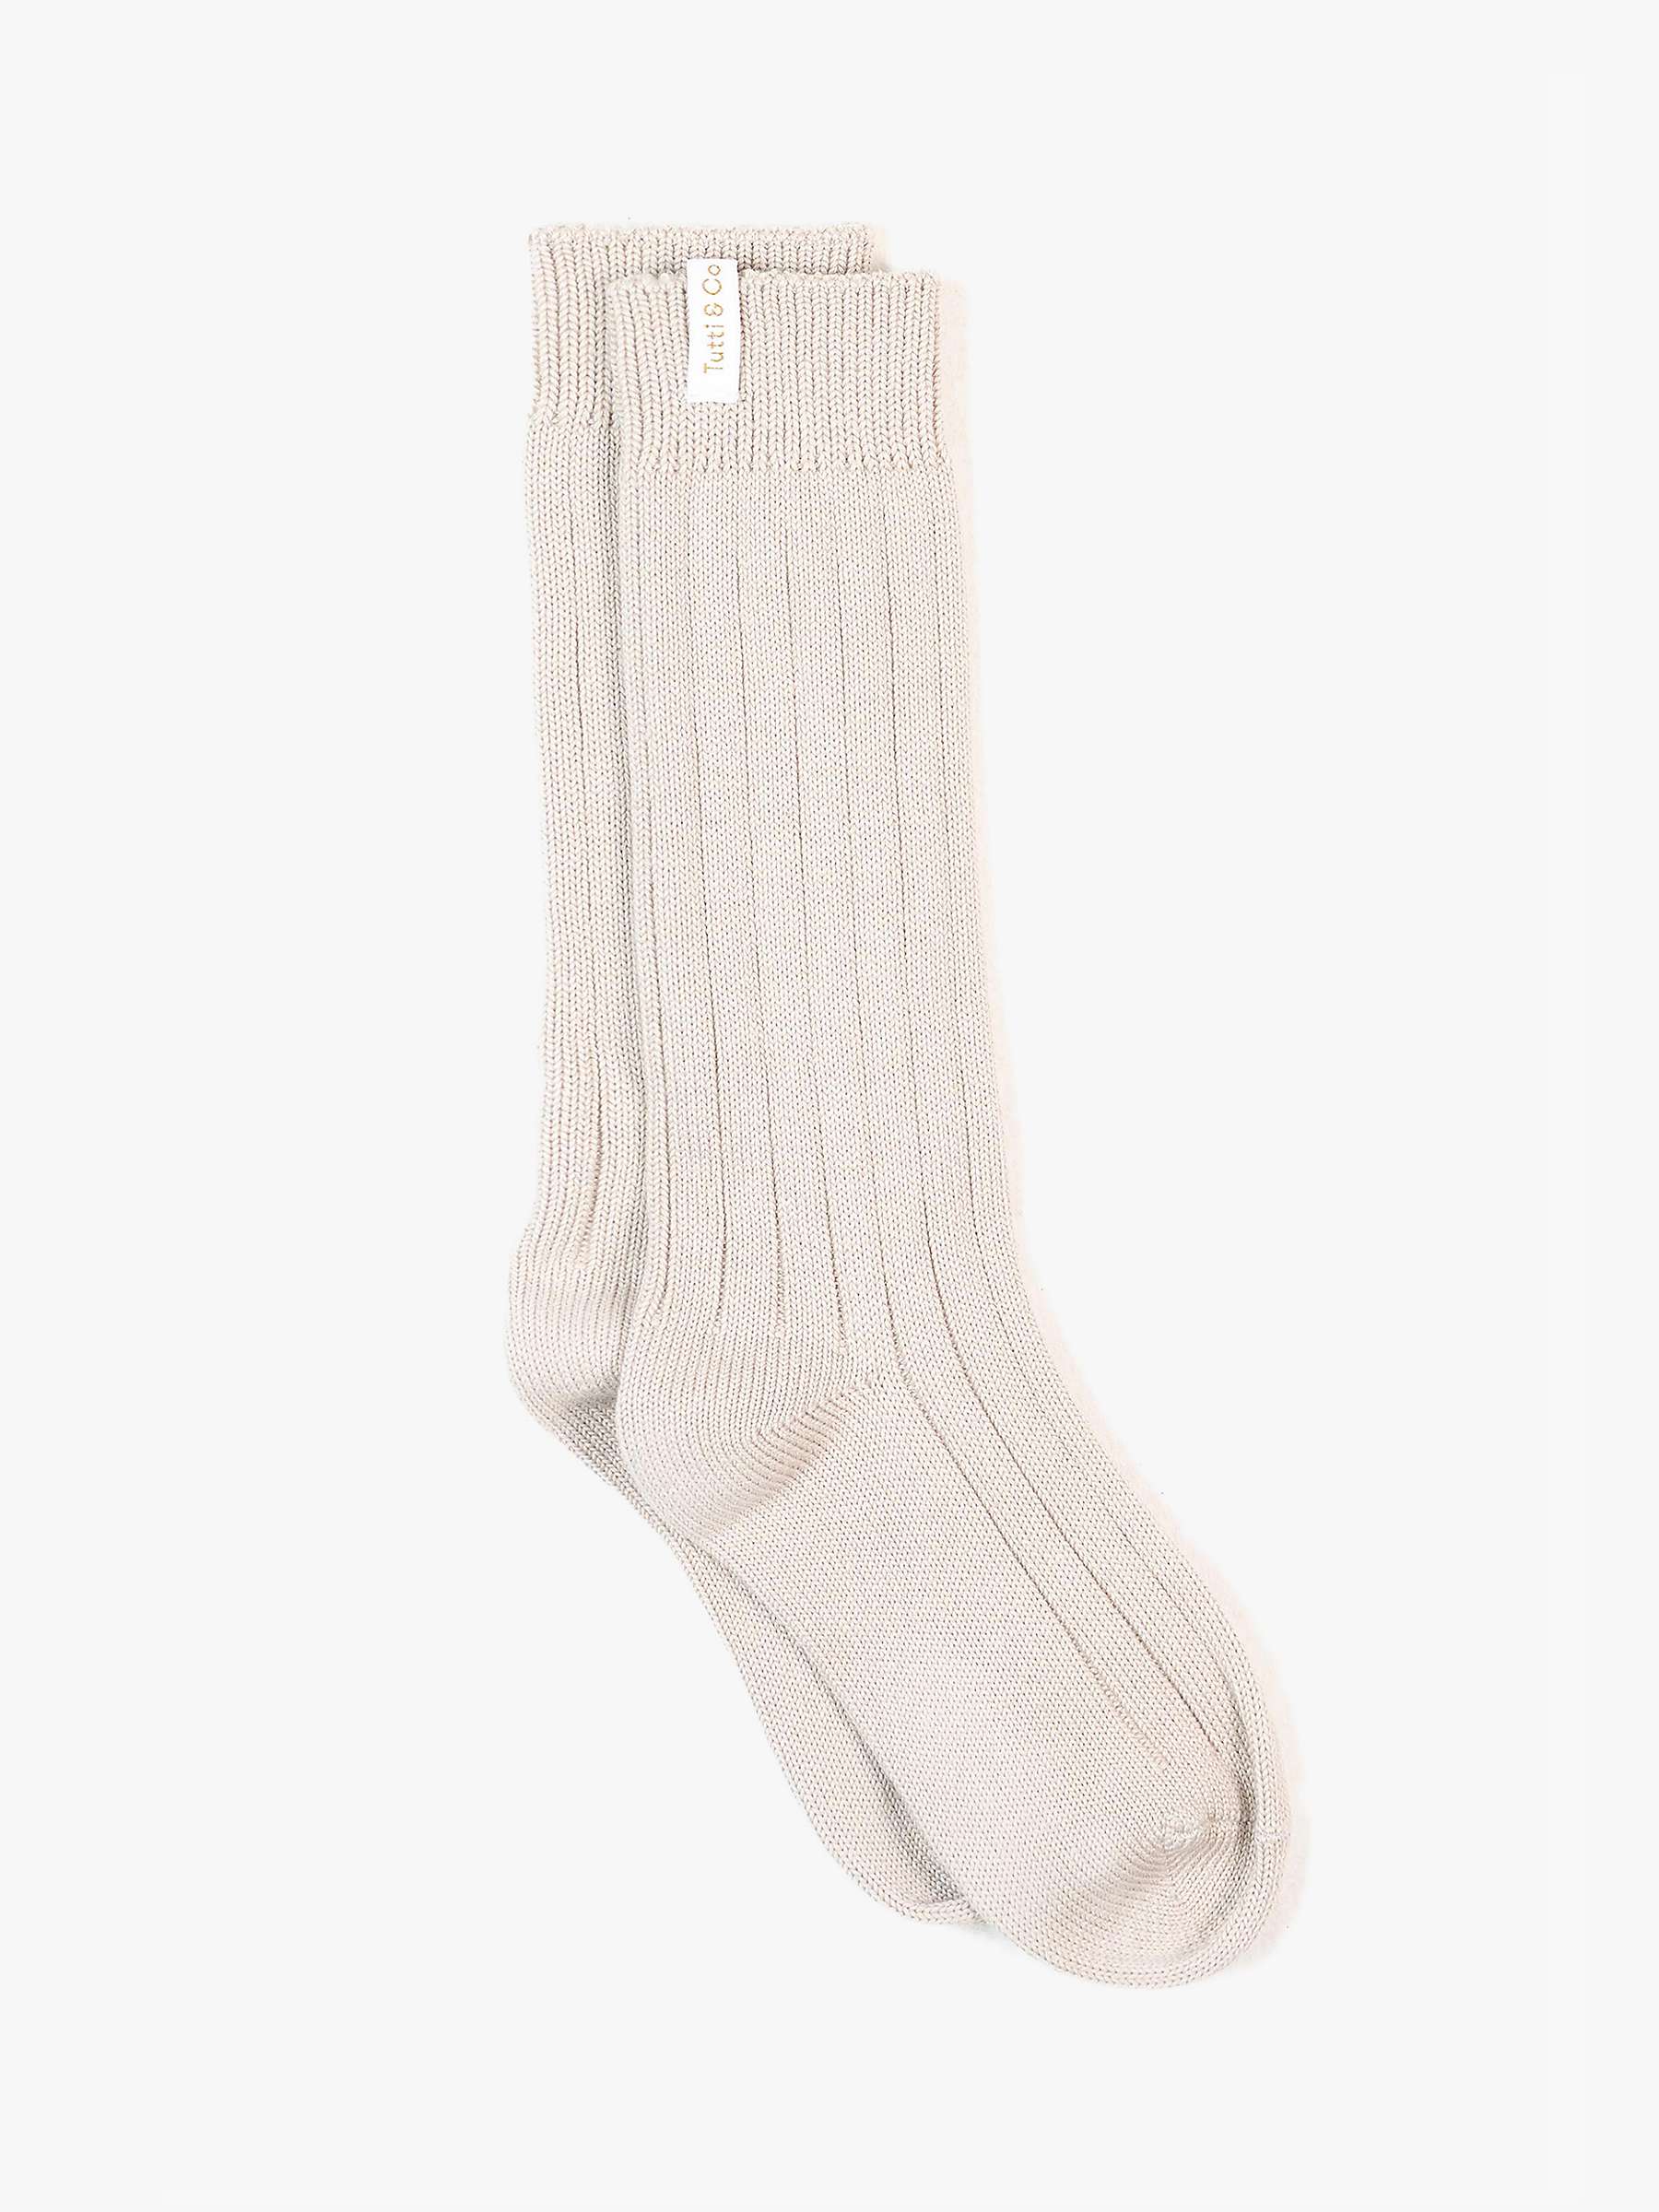 Buy Tutti & Co Farne Plain Ribbed Long Socks, One Size Online at johnlewis.com